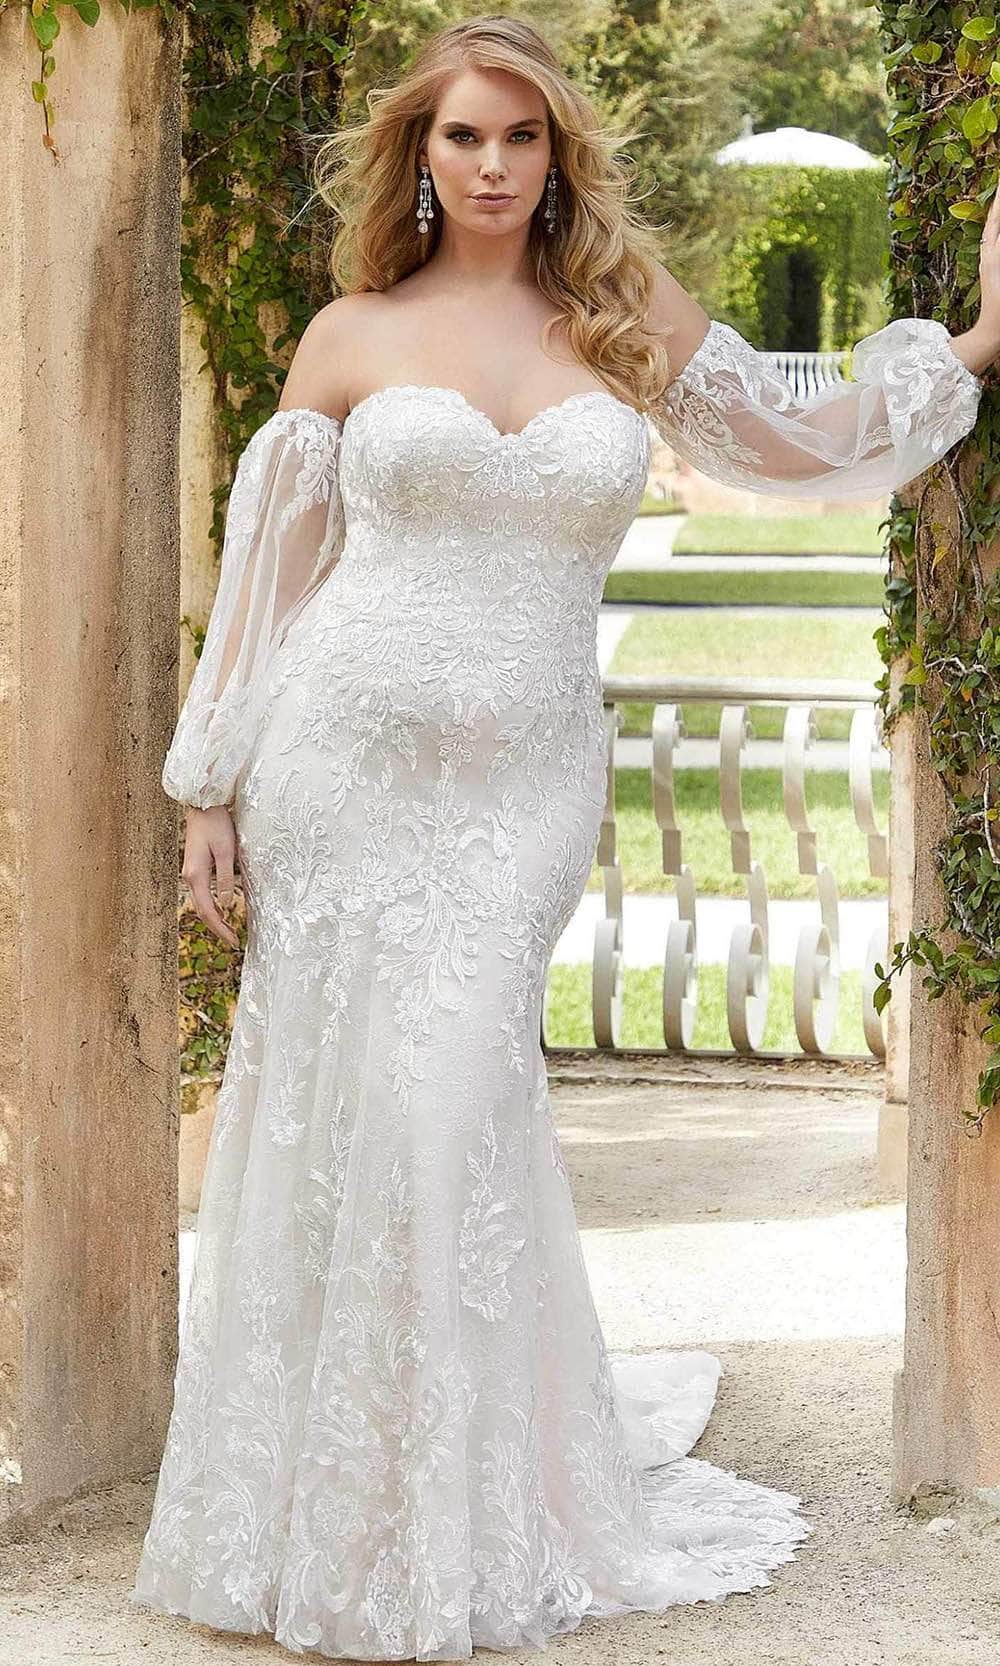 Mori Lee Bridal 3365C - Embroidered Sweetheart Neck Wedding Dress Wedding Dresses 00 / Ivory/Porcelain